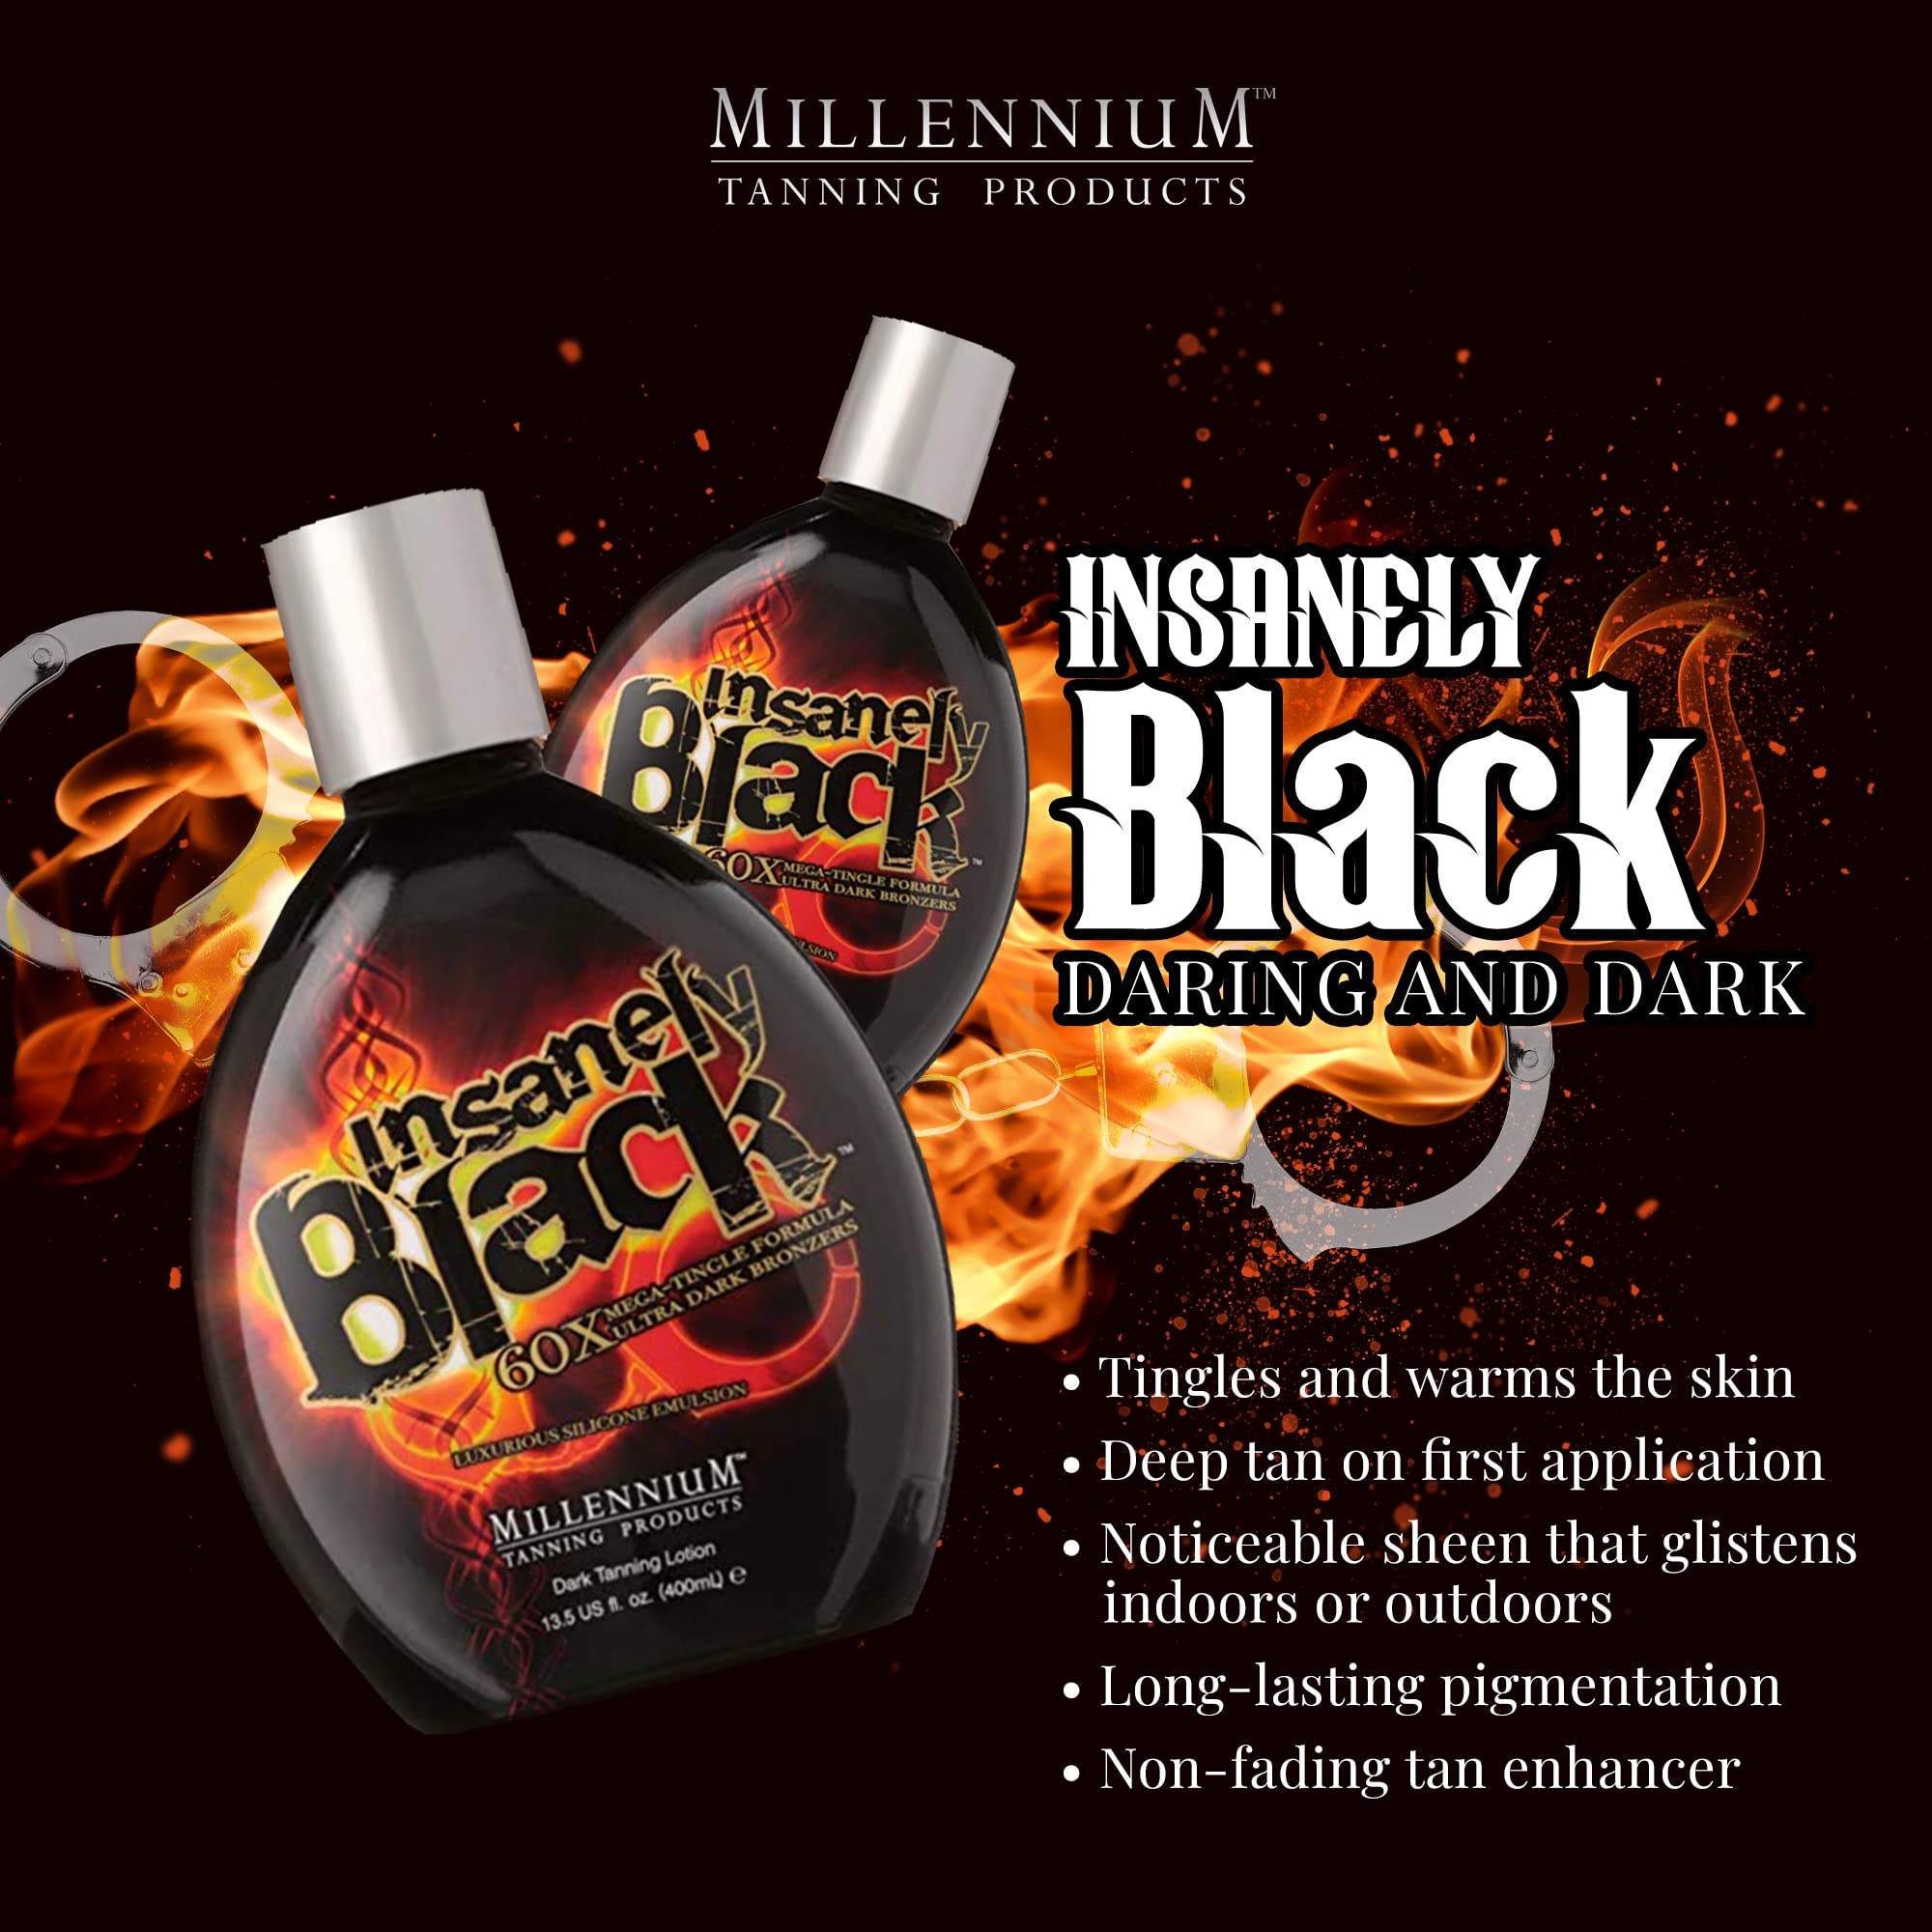 Millennium Tanning Insanely Black 60x, Mega Tingle Dark Tanning Lotion, 13.5 Ounces